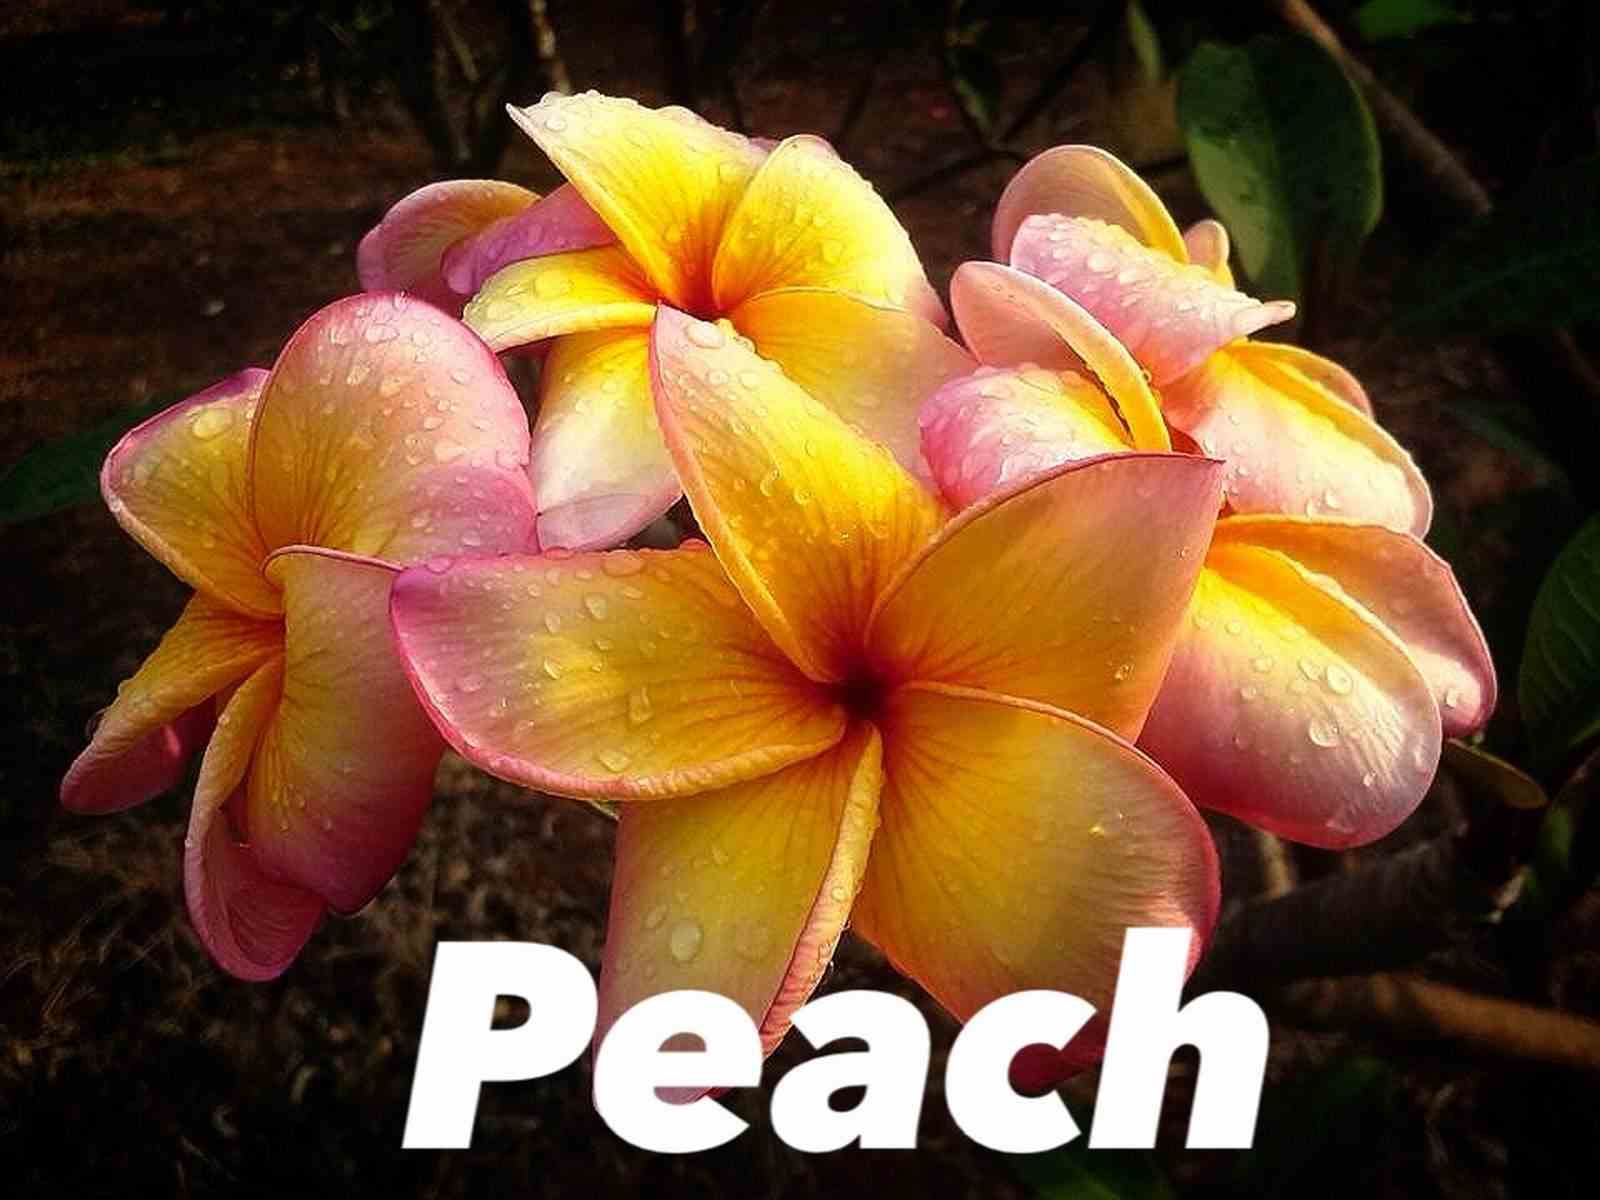 Plumeria rubra "peach" (frangipanier) taille pot de 2 litres ? 20/30 cm -   blanc/jaune/rose